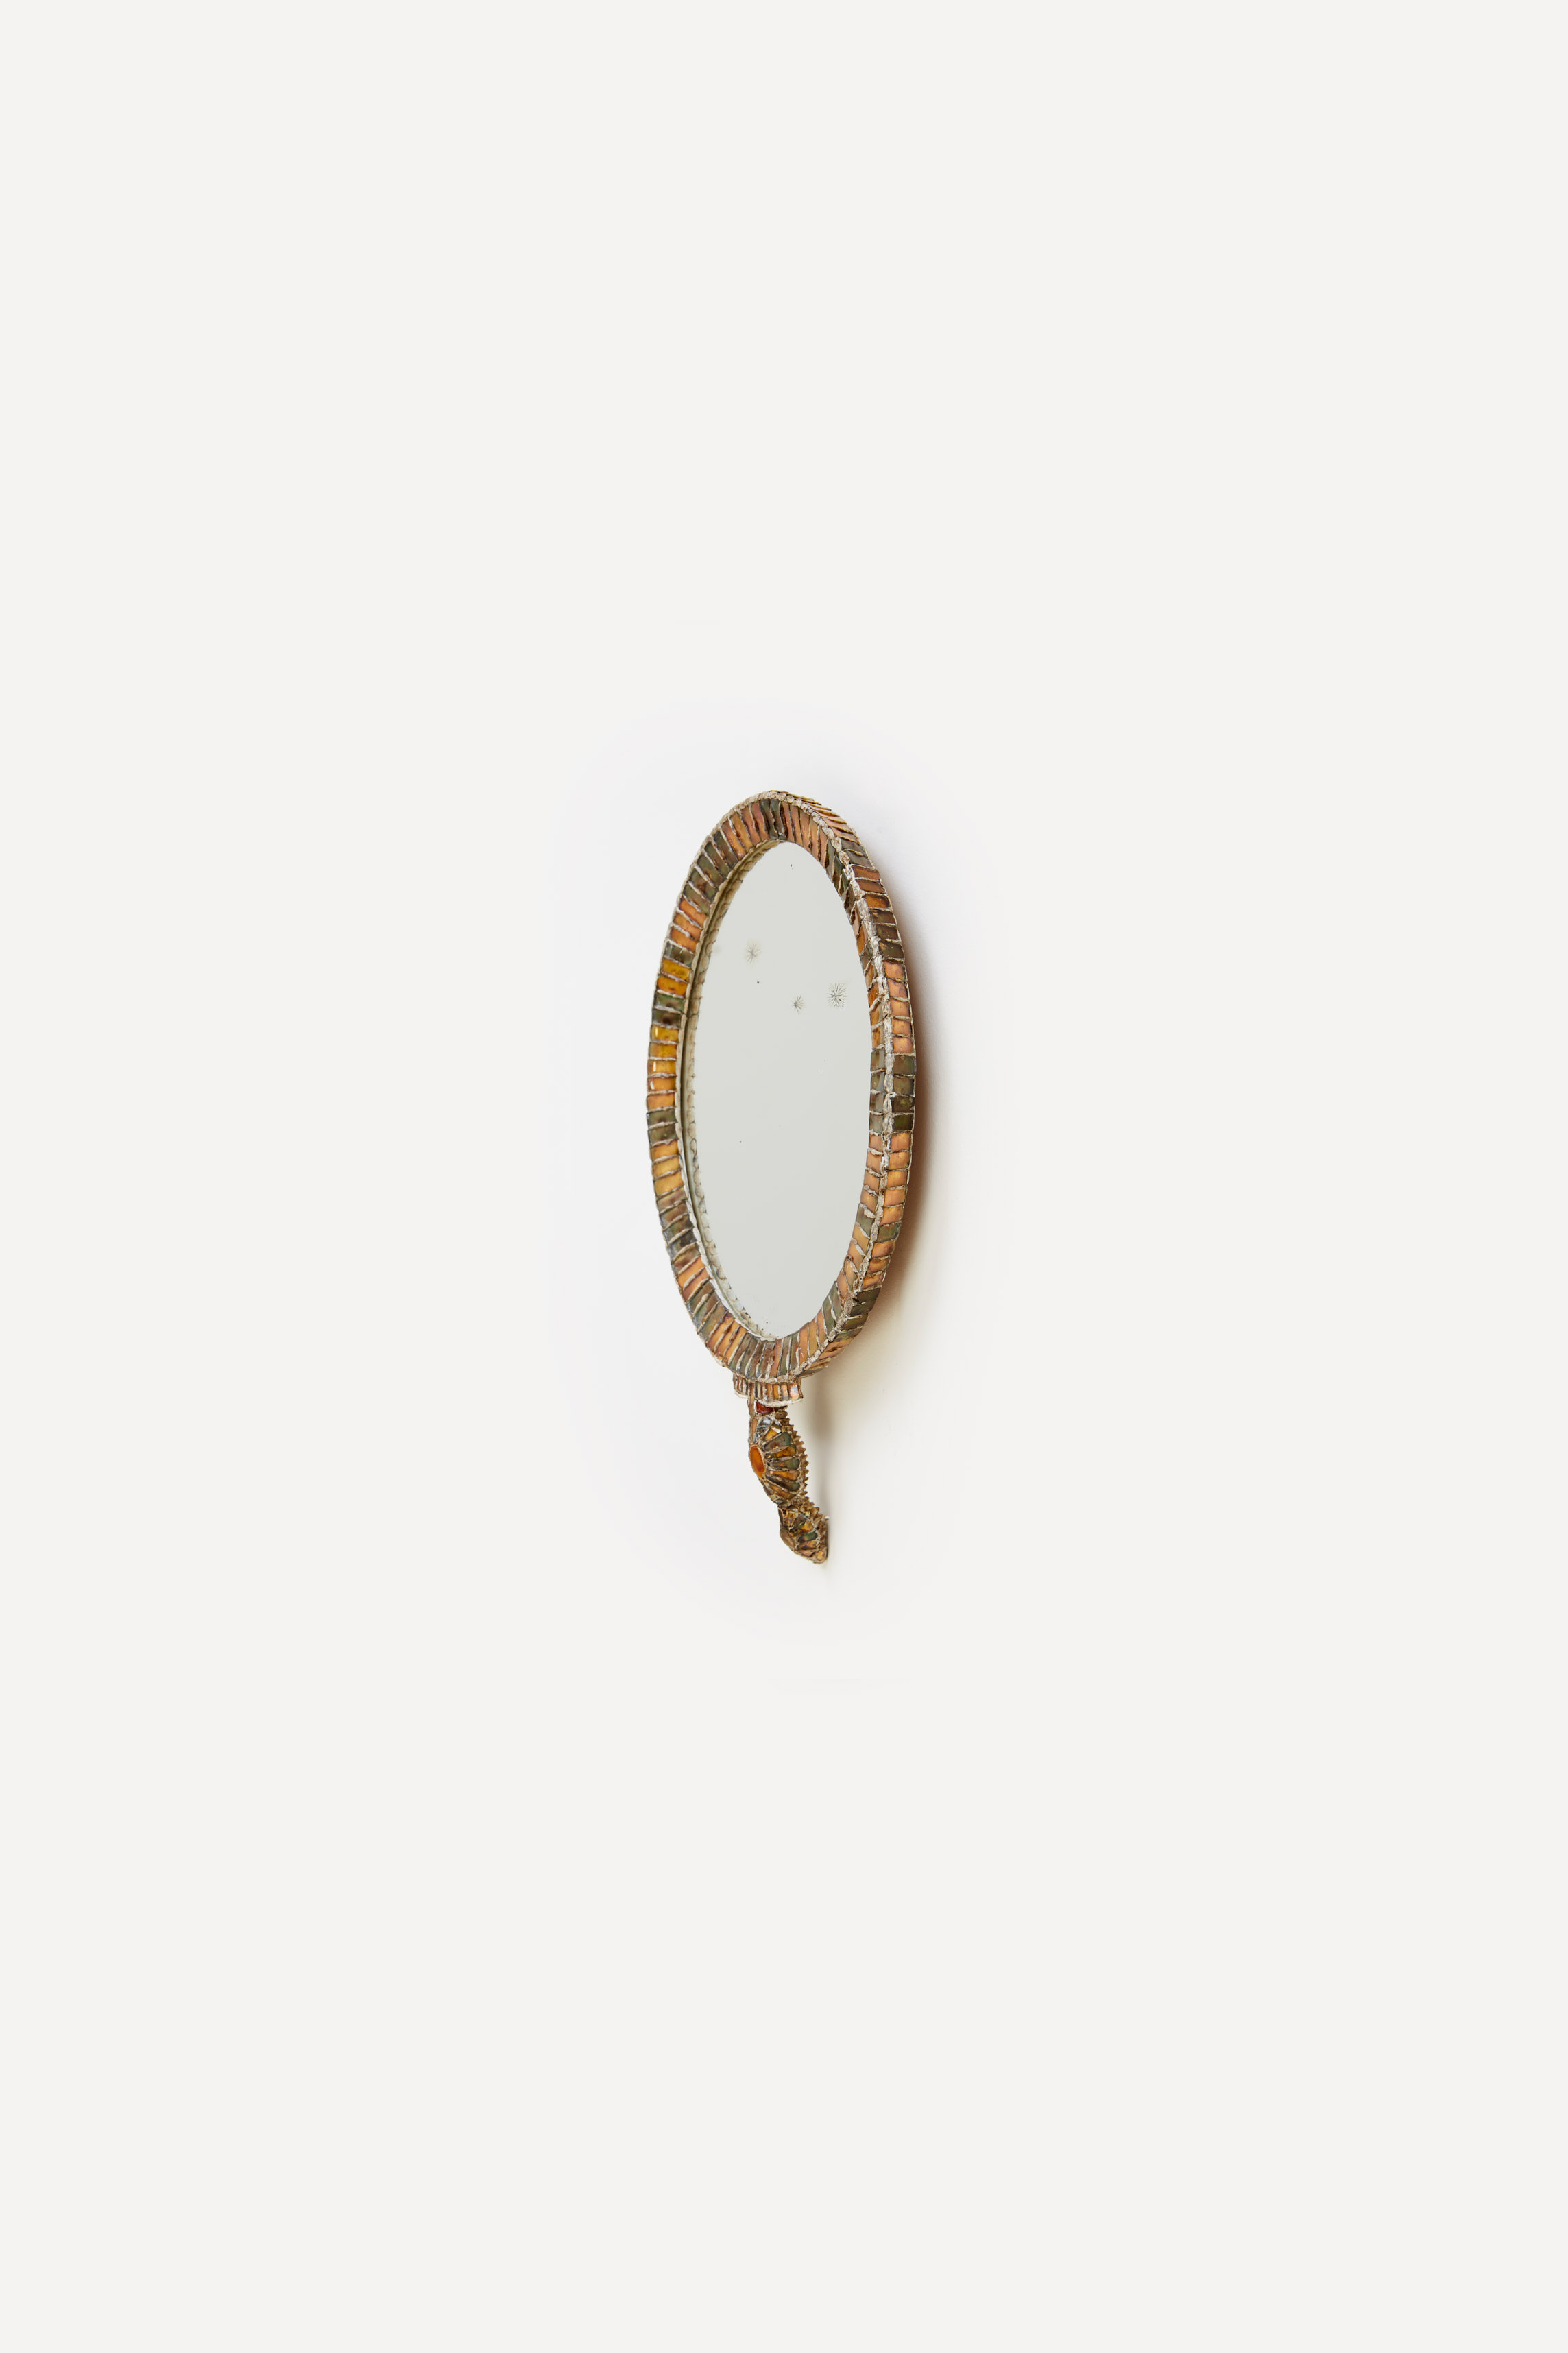 Line Vautrin, “Gabrielle” mirror, vue 02